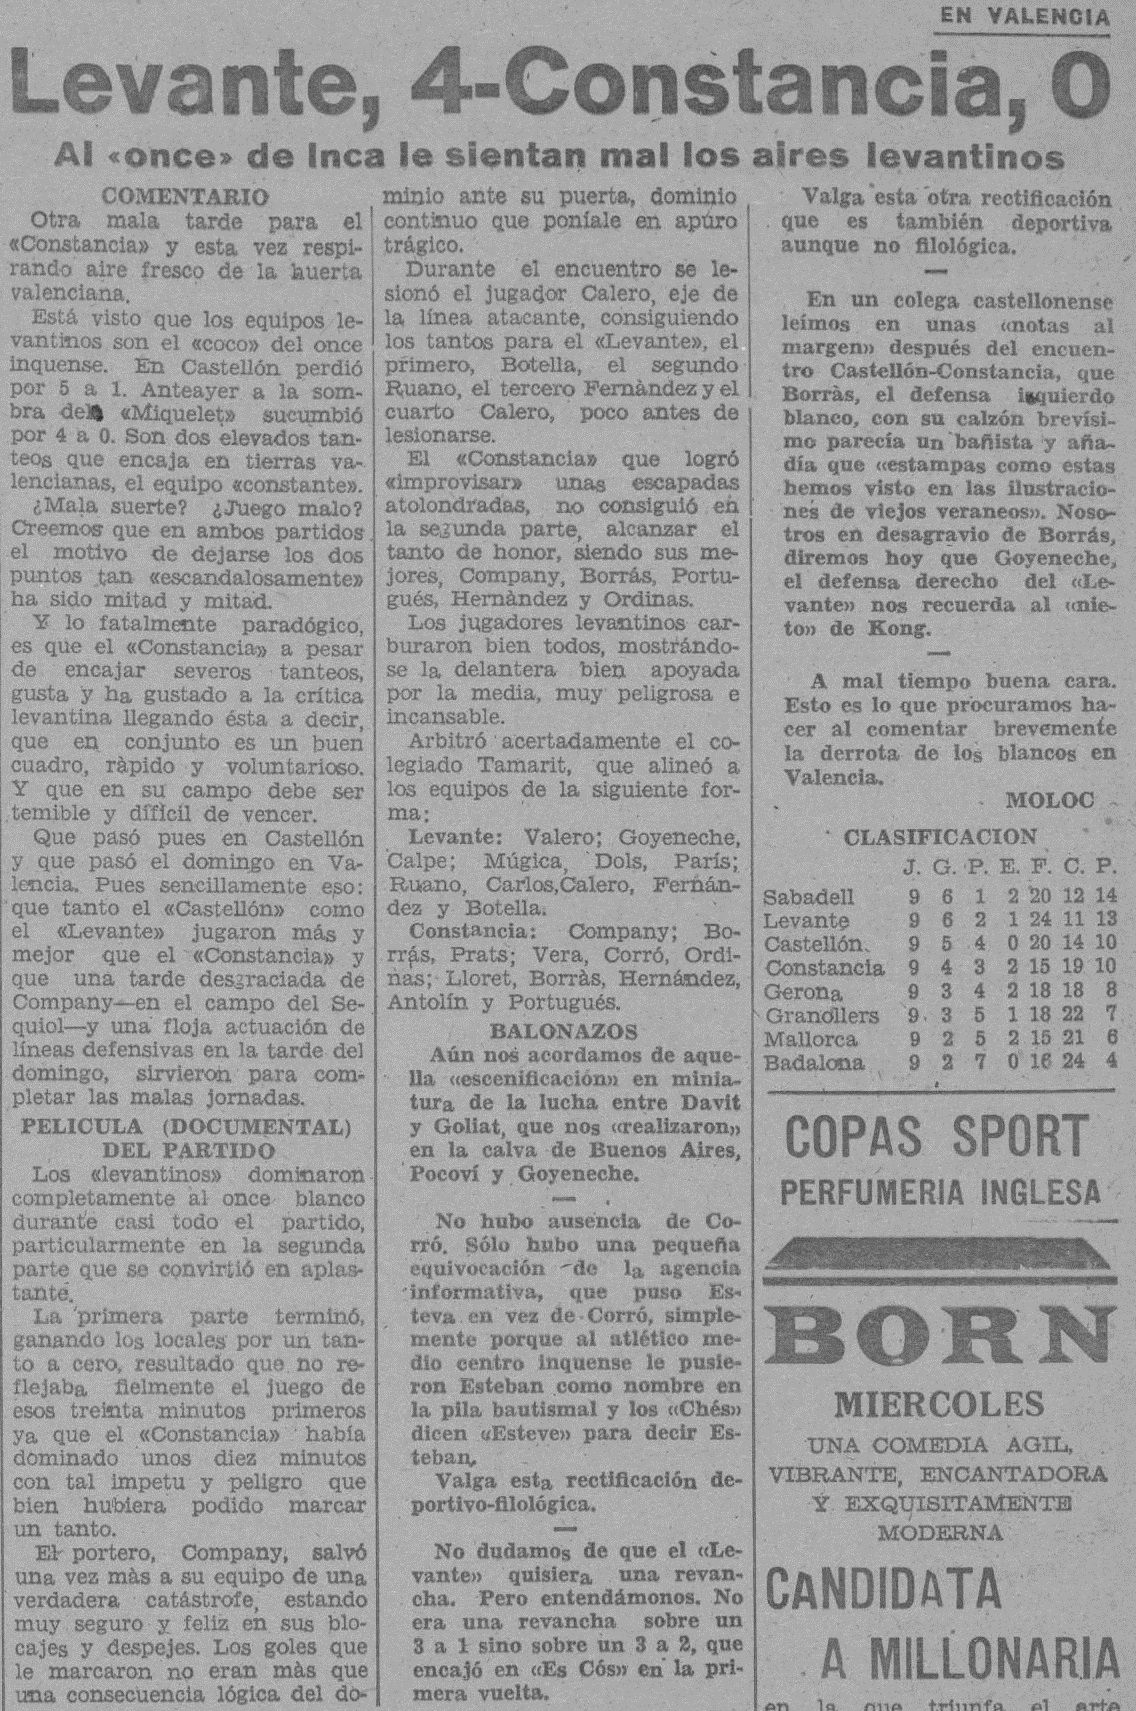 1940.01.28 (28 января 1940), Леванте - Констанция, 4-0.jpg